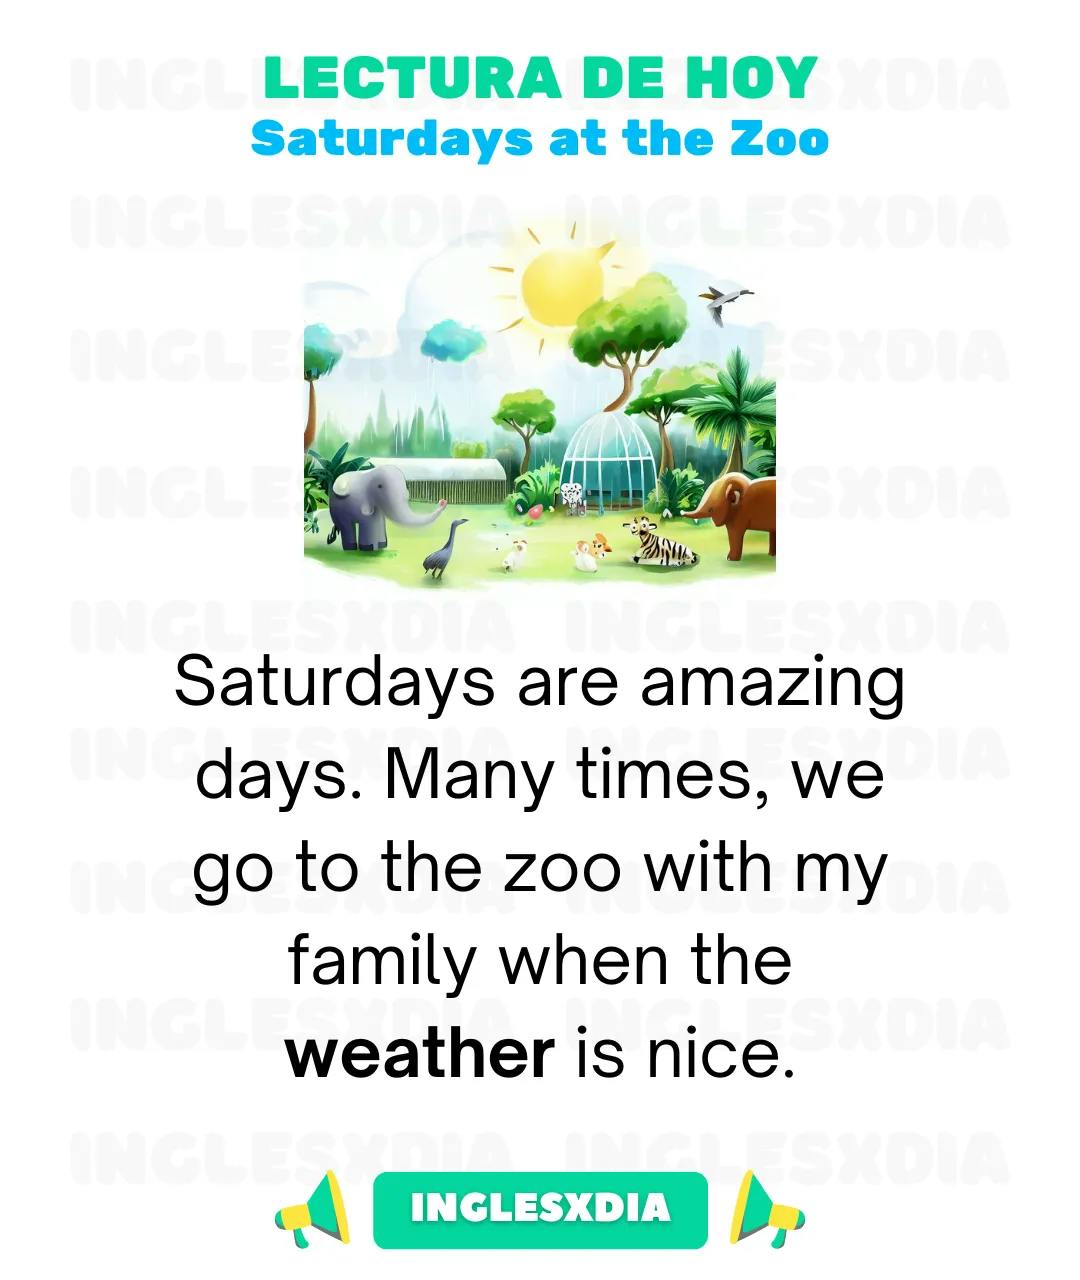 Saturdays at the Zoo